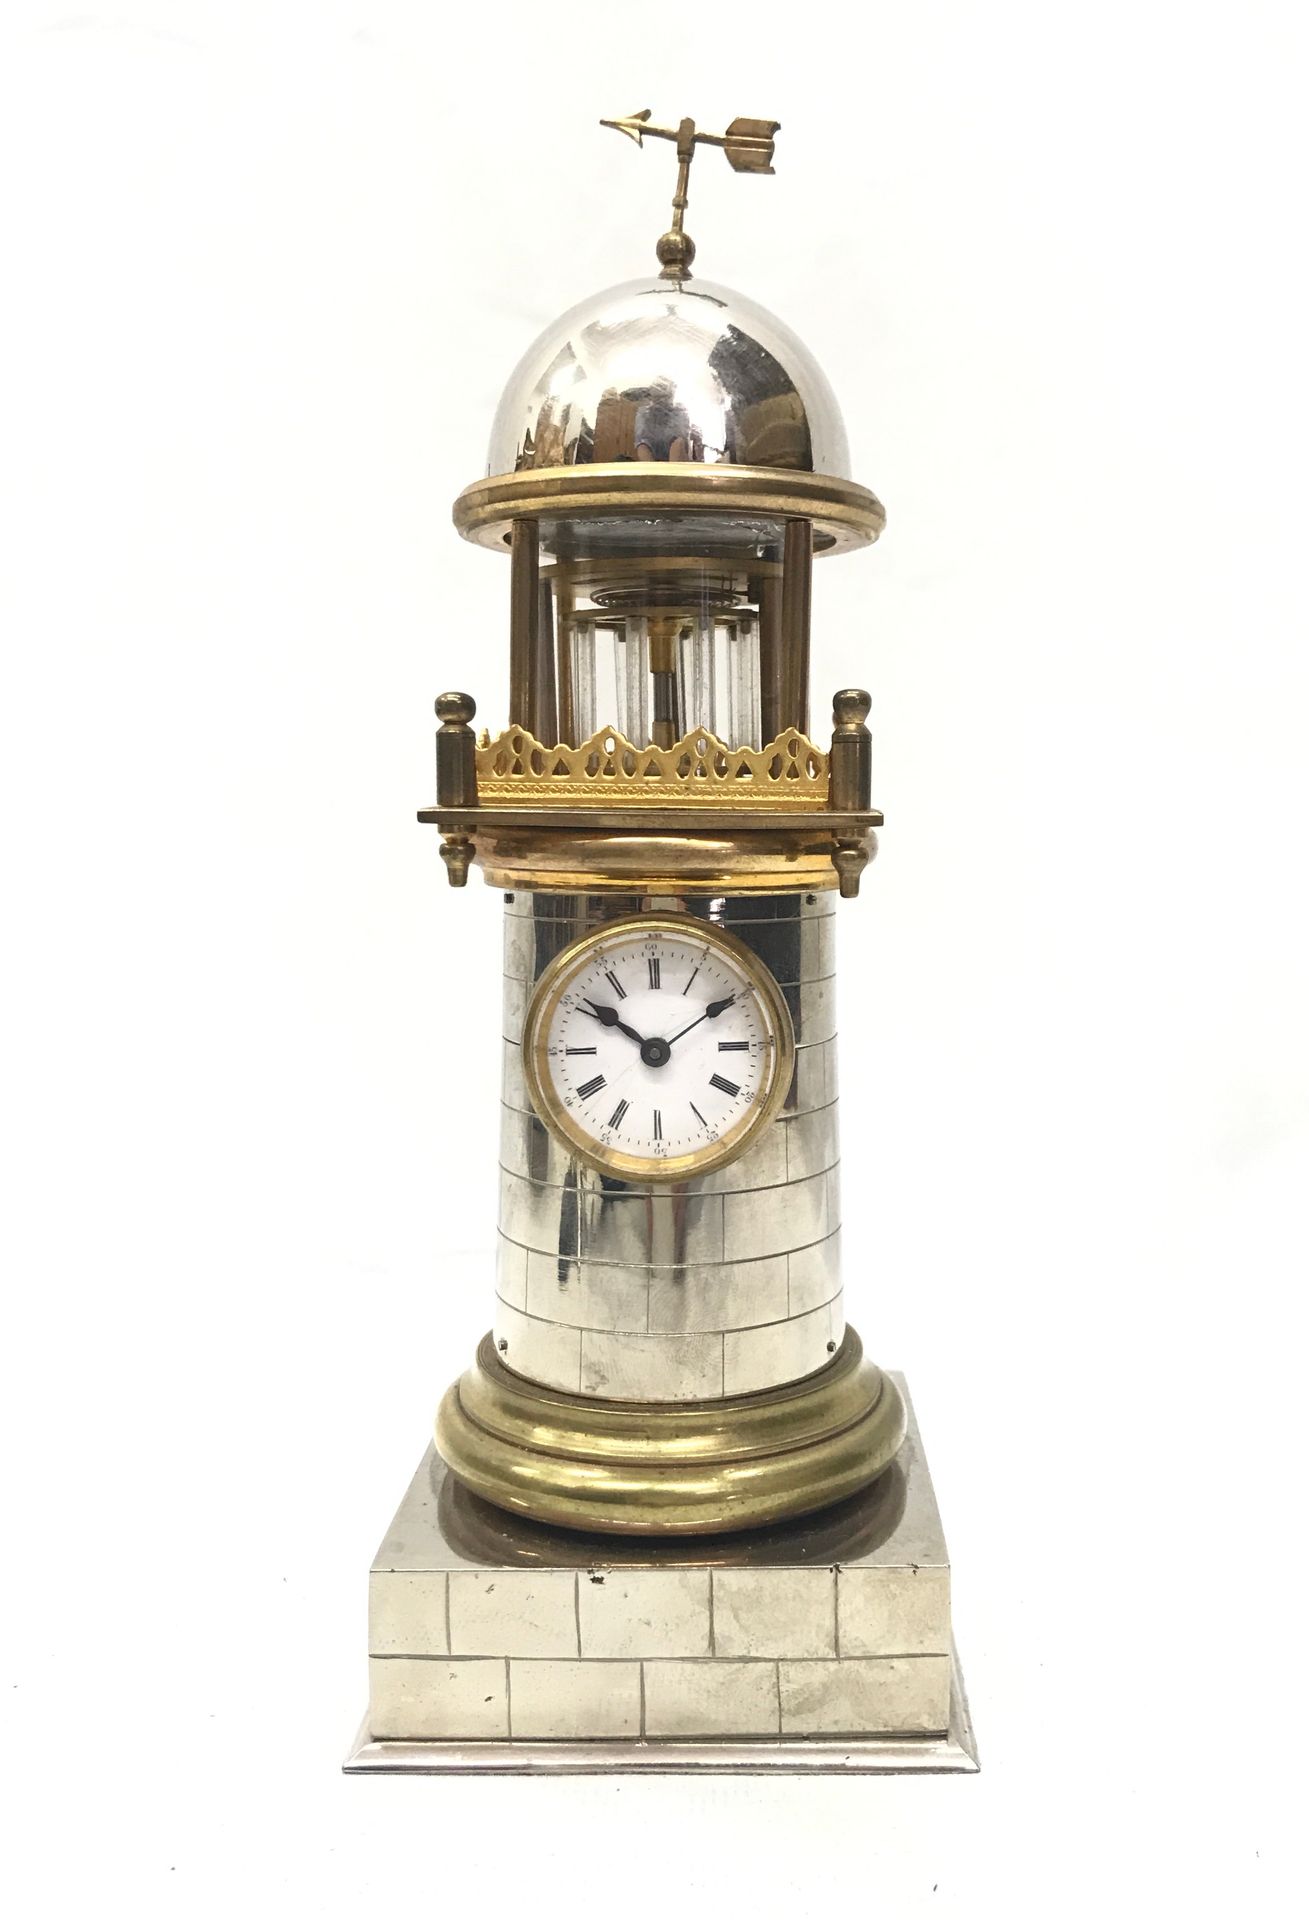 Null Reloj del Faro

Reloj de faro en bronce plateado y dorado. Esfera esmaltada&hellip;